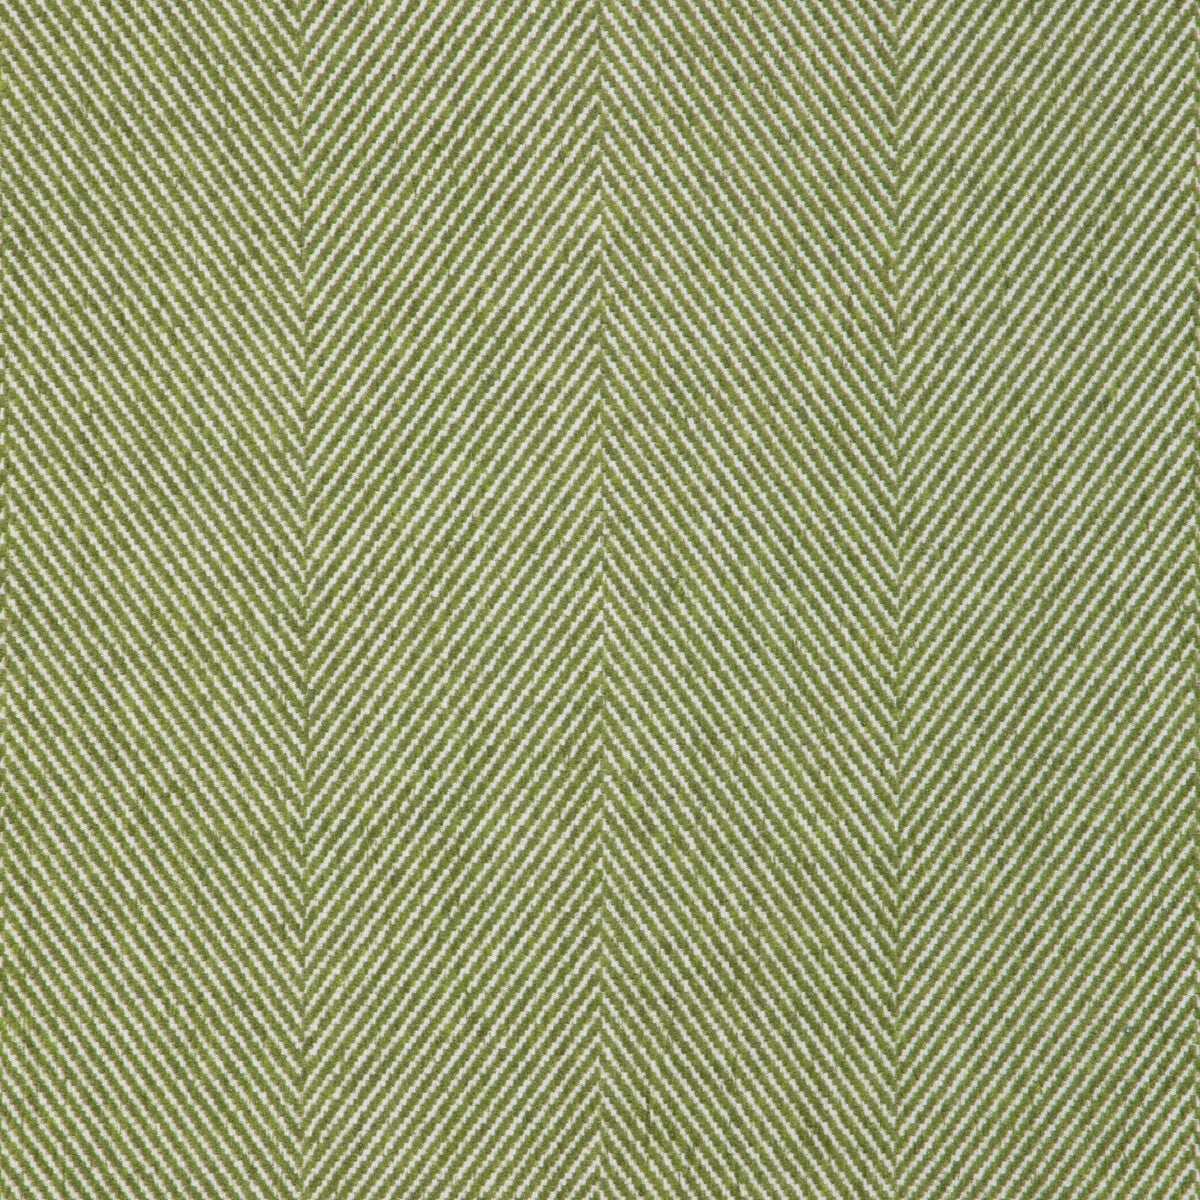 Kravet Design fabric in 36775-3 color - pattern 36775.3.0 - by Kravet Design in the Sea Island Indoor/Outdoor collection